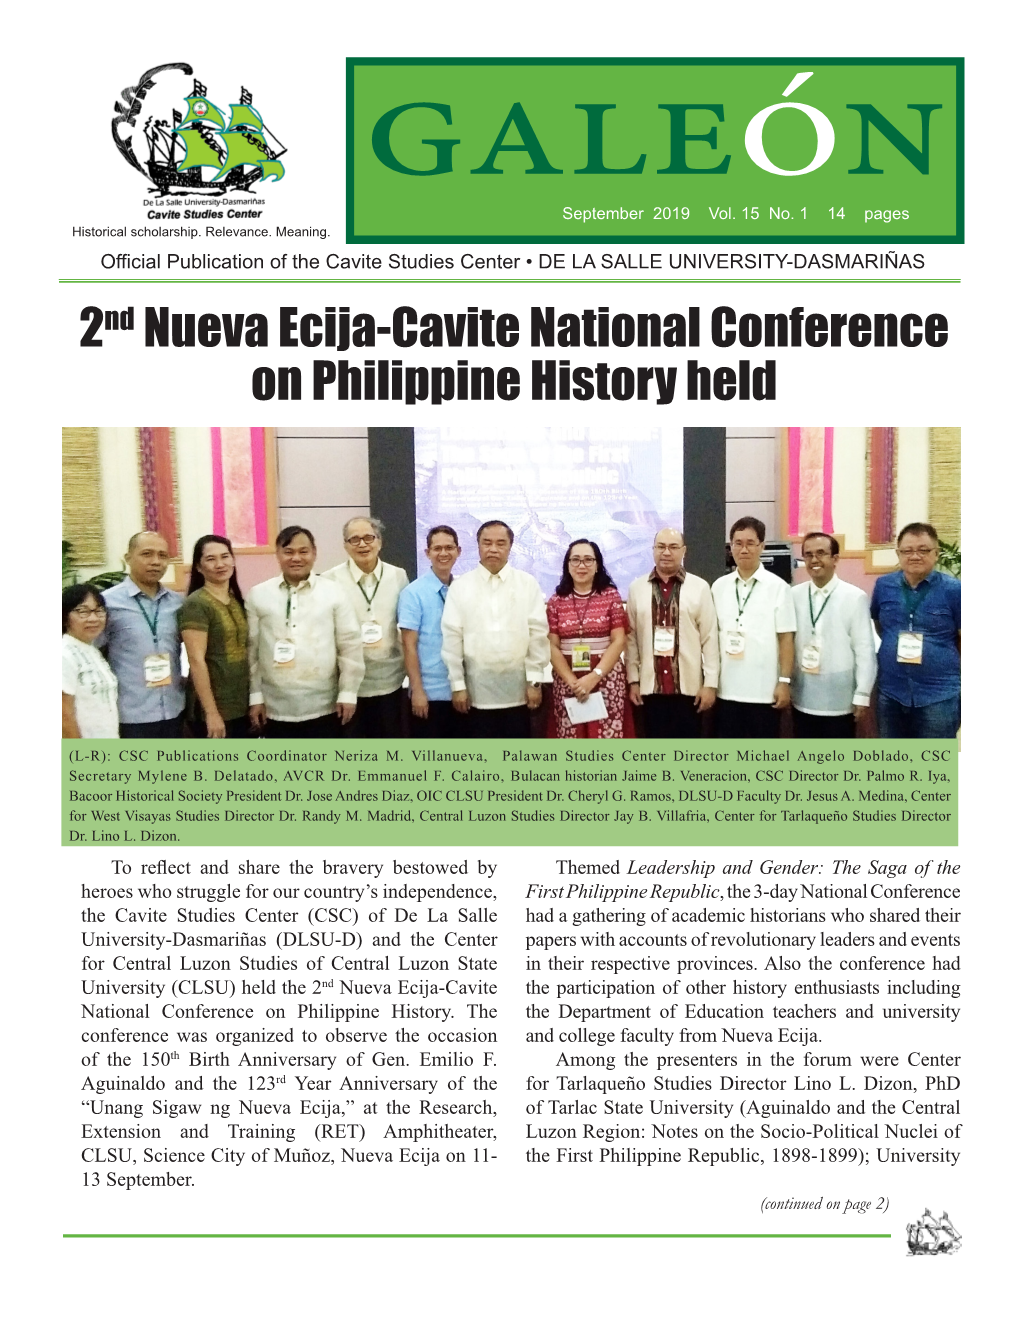 2Nd Nueva Ecija-Cavite National Conference on Philippine History Held